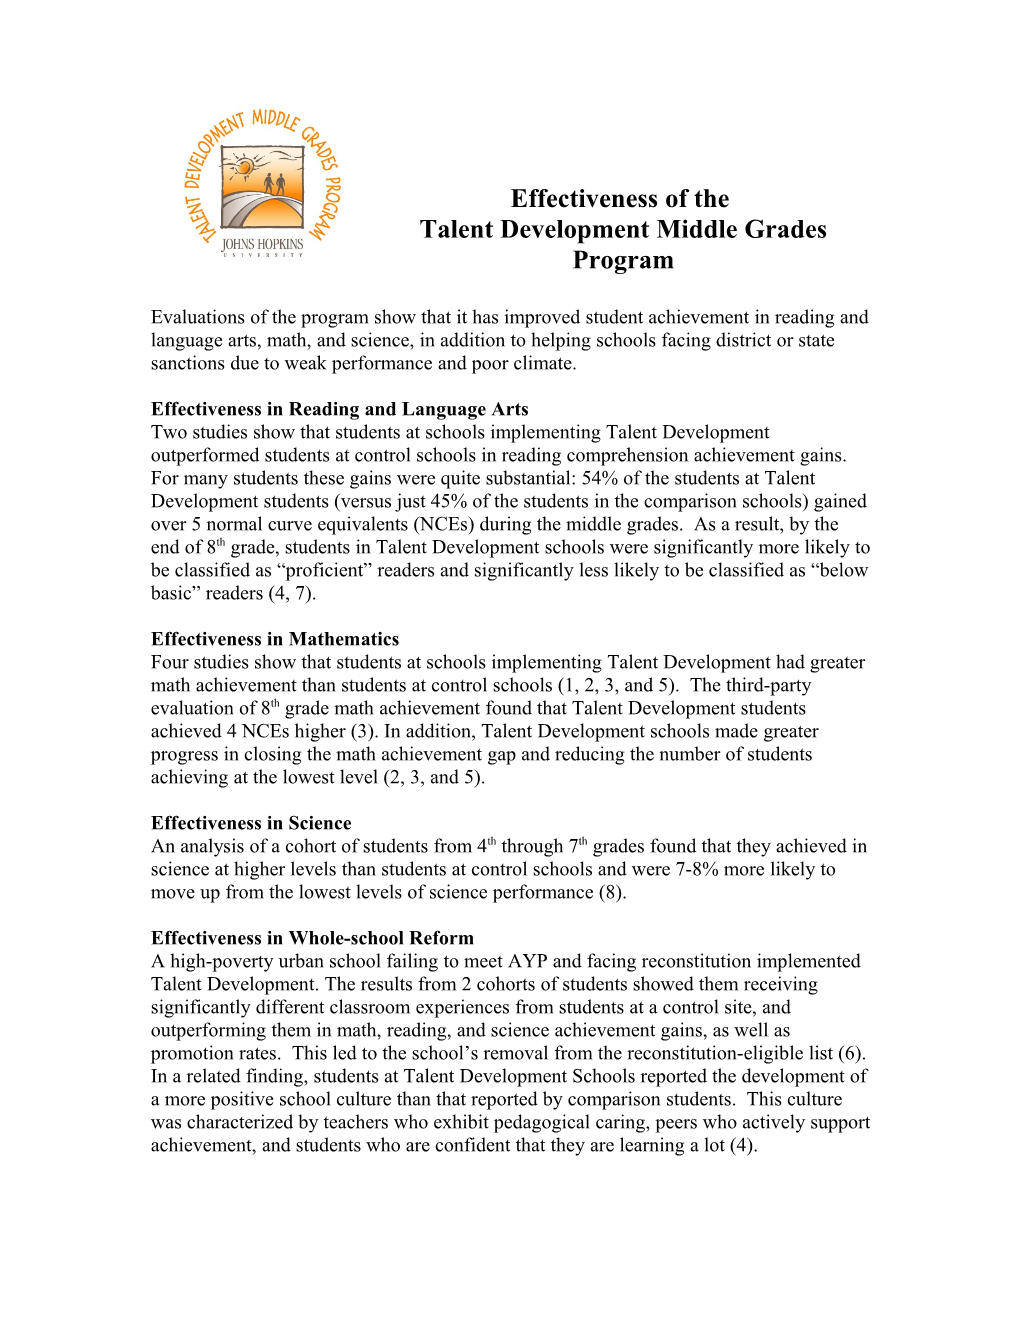 Effectiveness of Talent Development Middle Grades Program of Johns Hopkins University (1